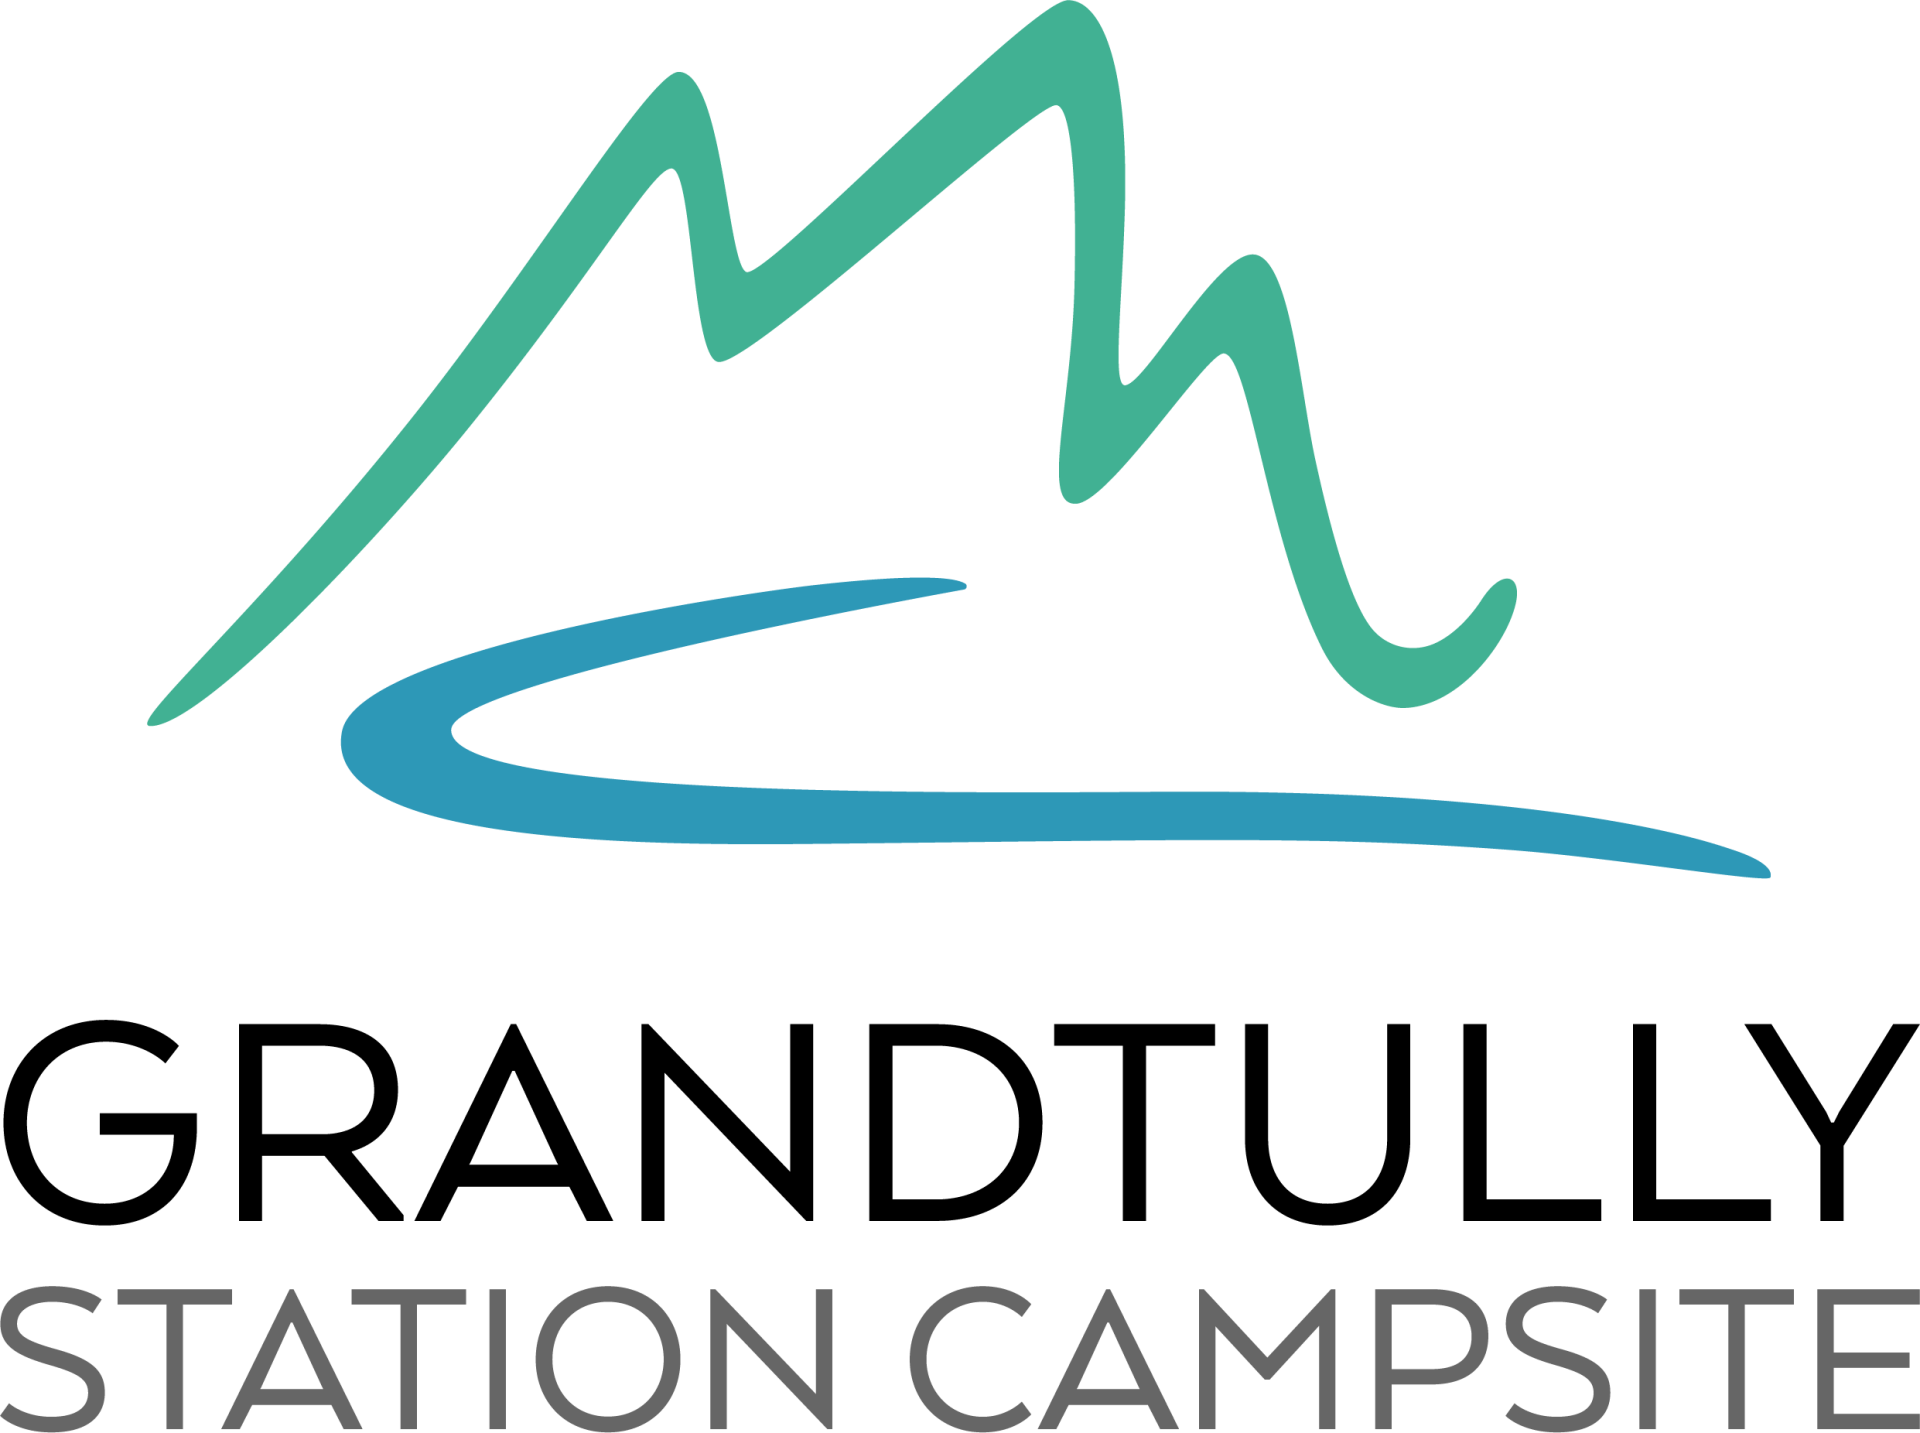 Grandtully Station Campsite Logo